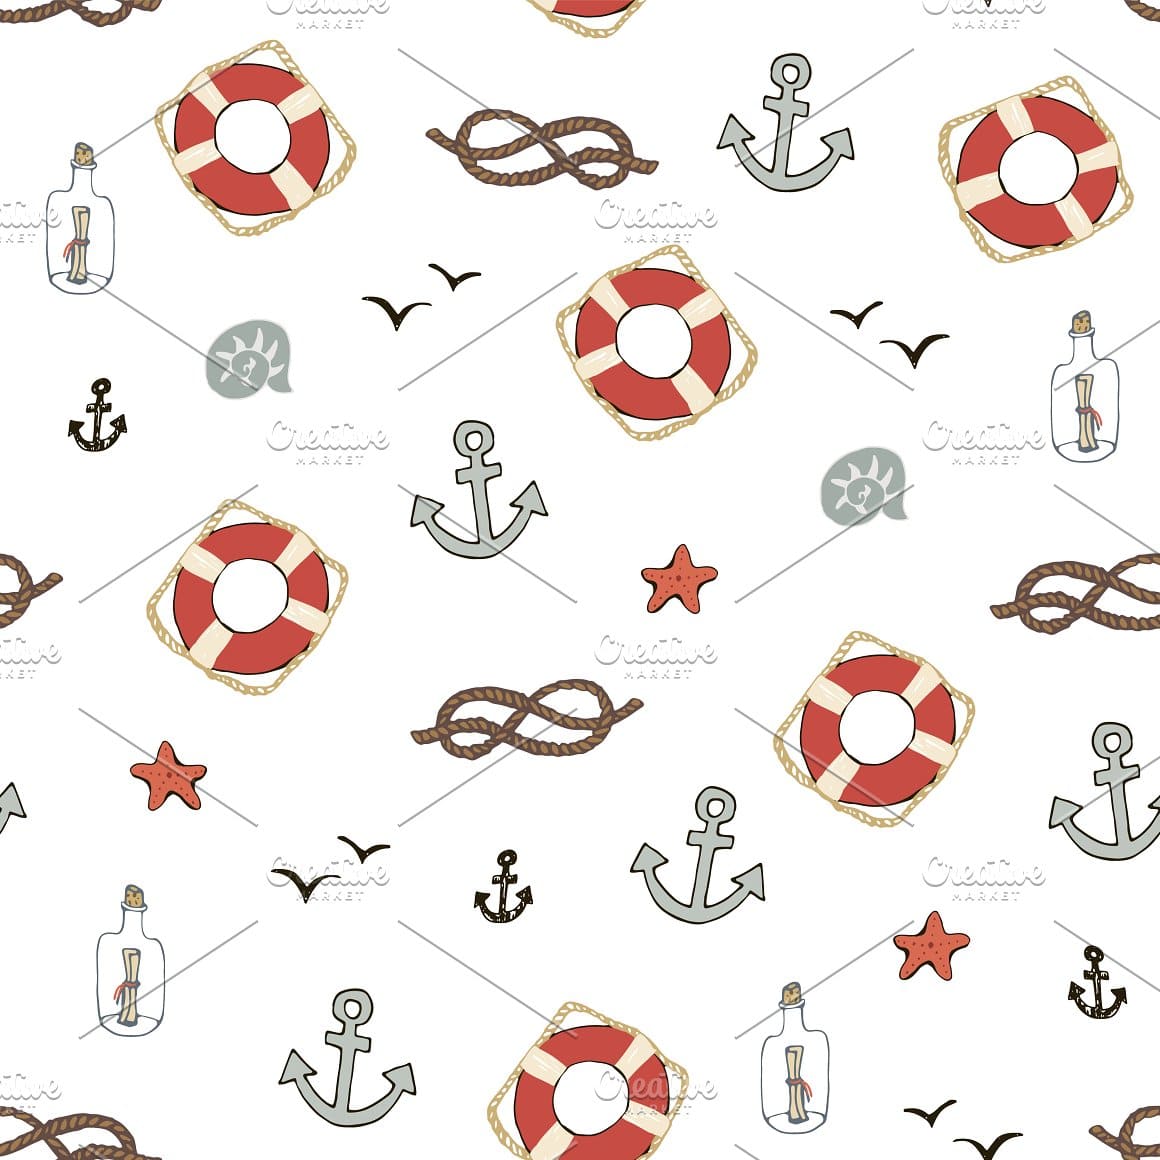 Seagulls, sea knots, starfish on a white background.